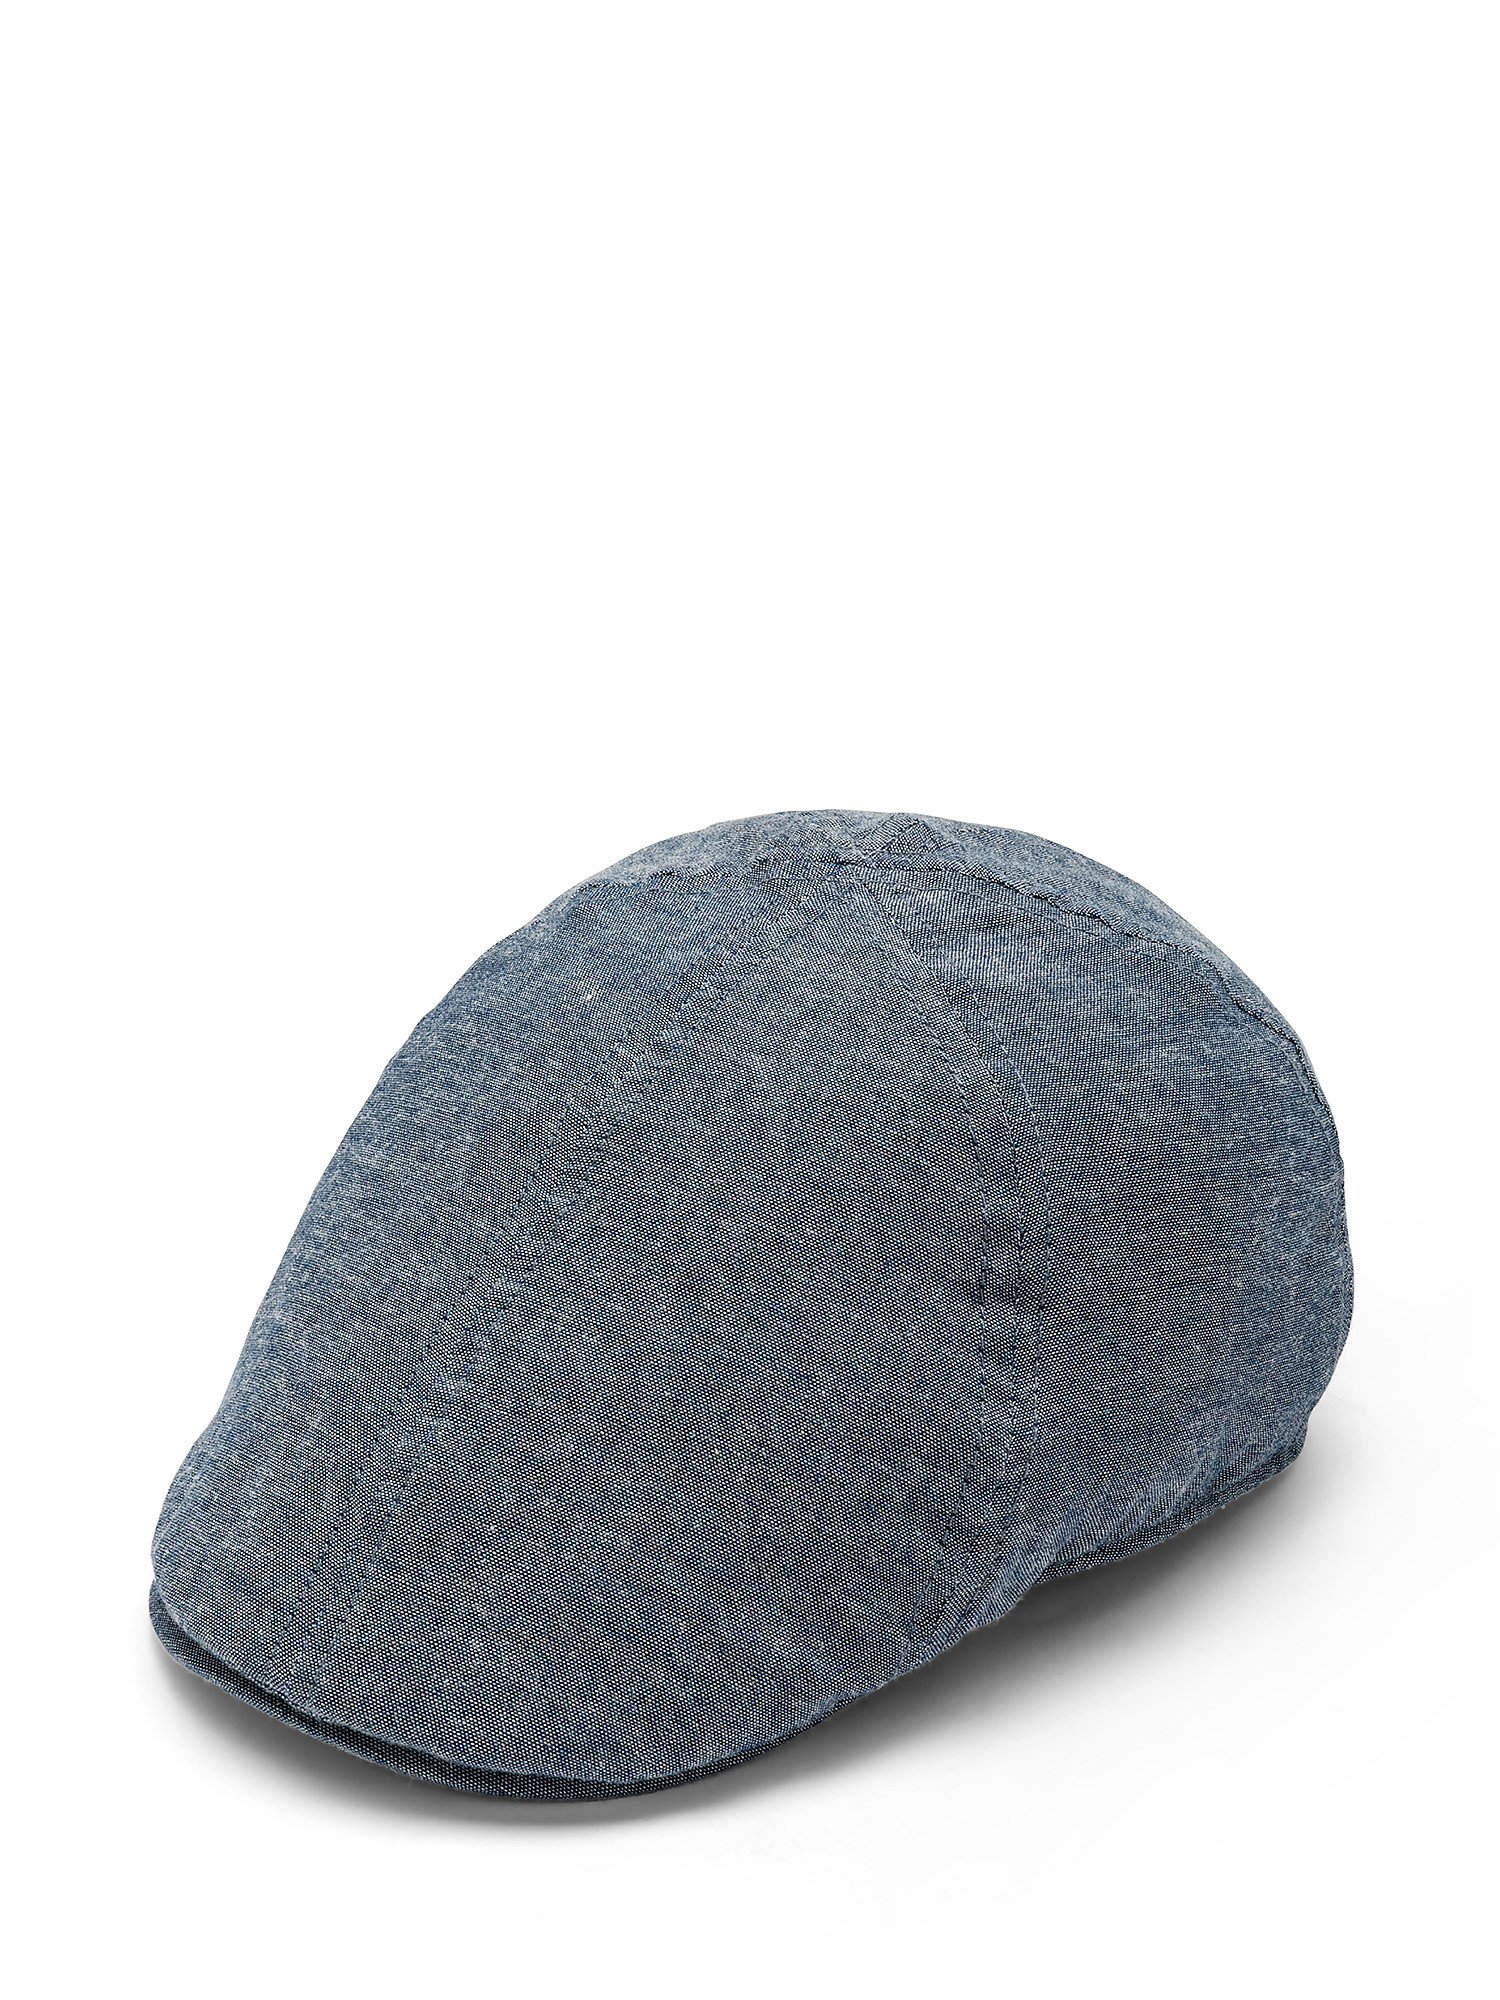 Monochrome cap, Blue, large image number 0